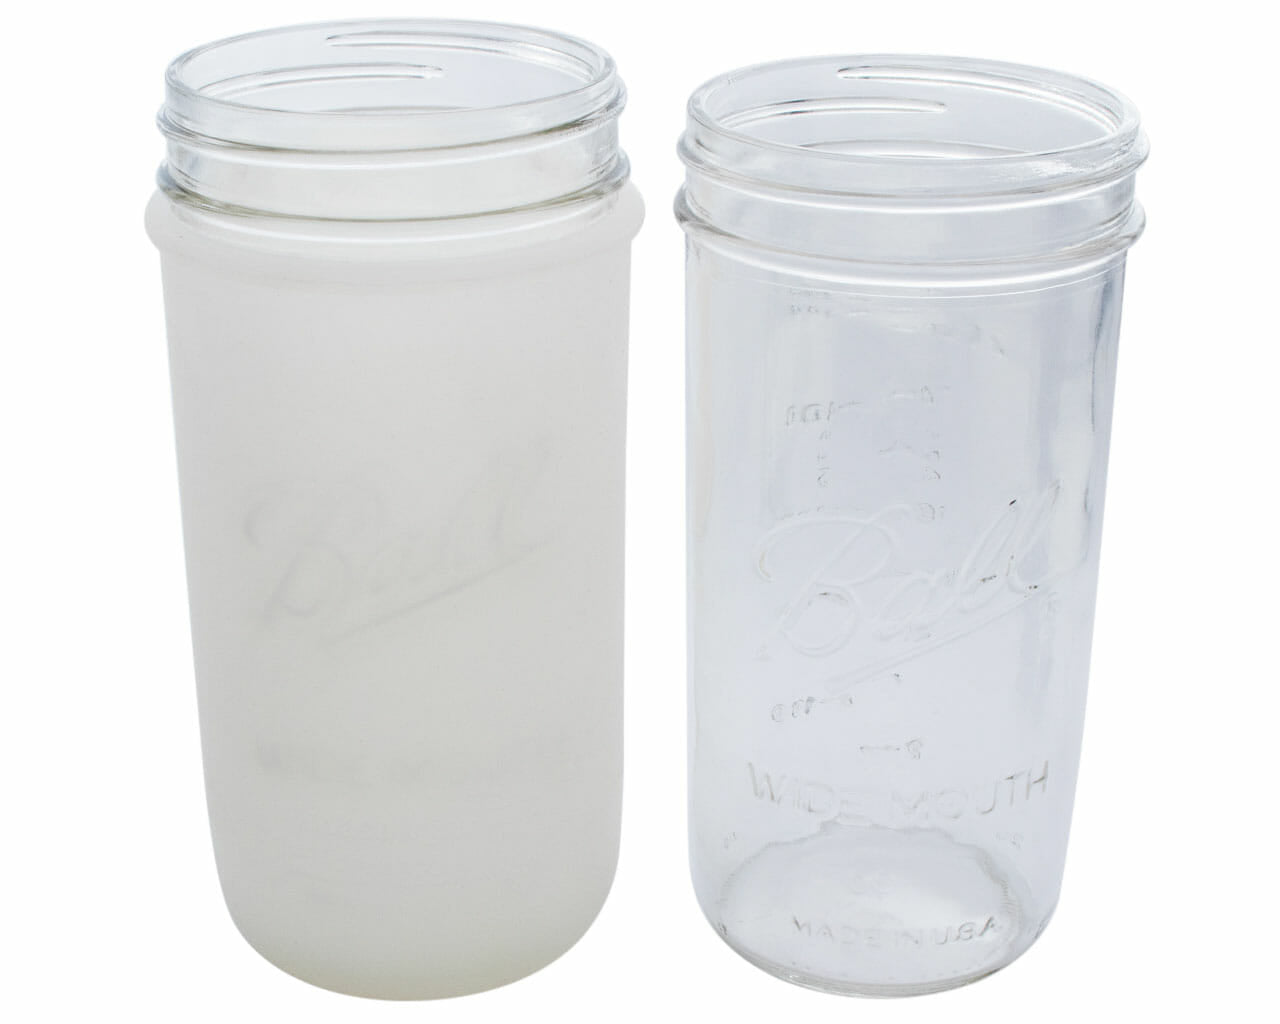 24 Oz Glass Drinking Mason Jar Mugs - Cold Beverage Drinking